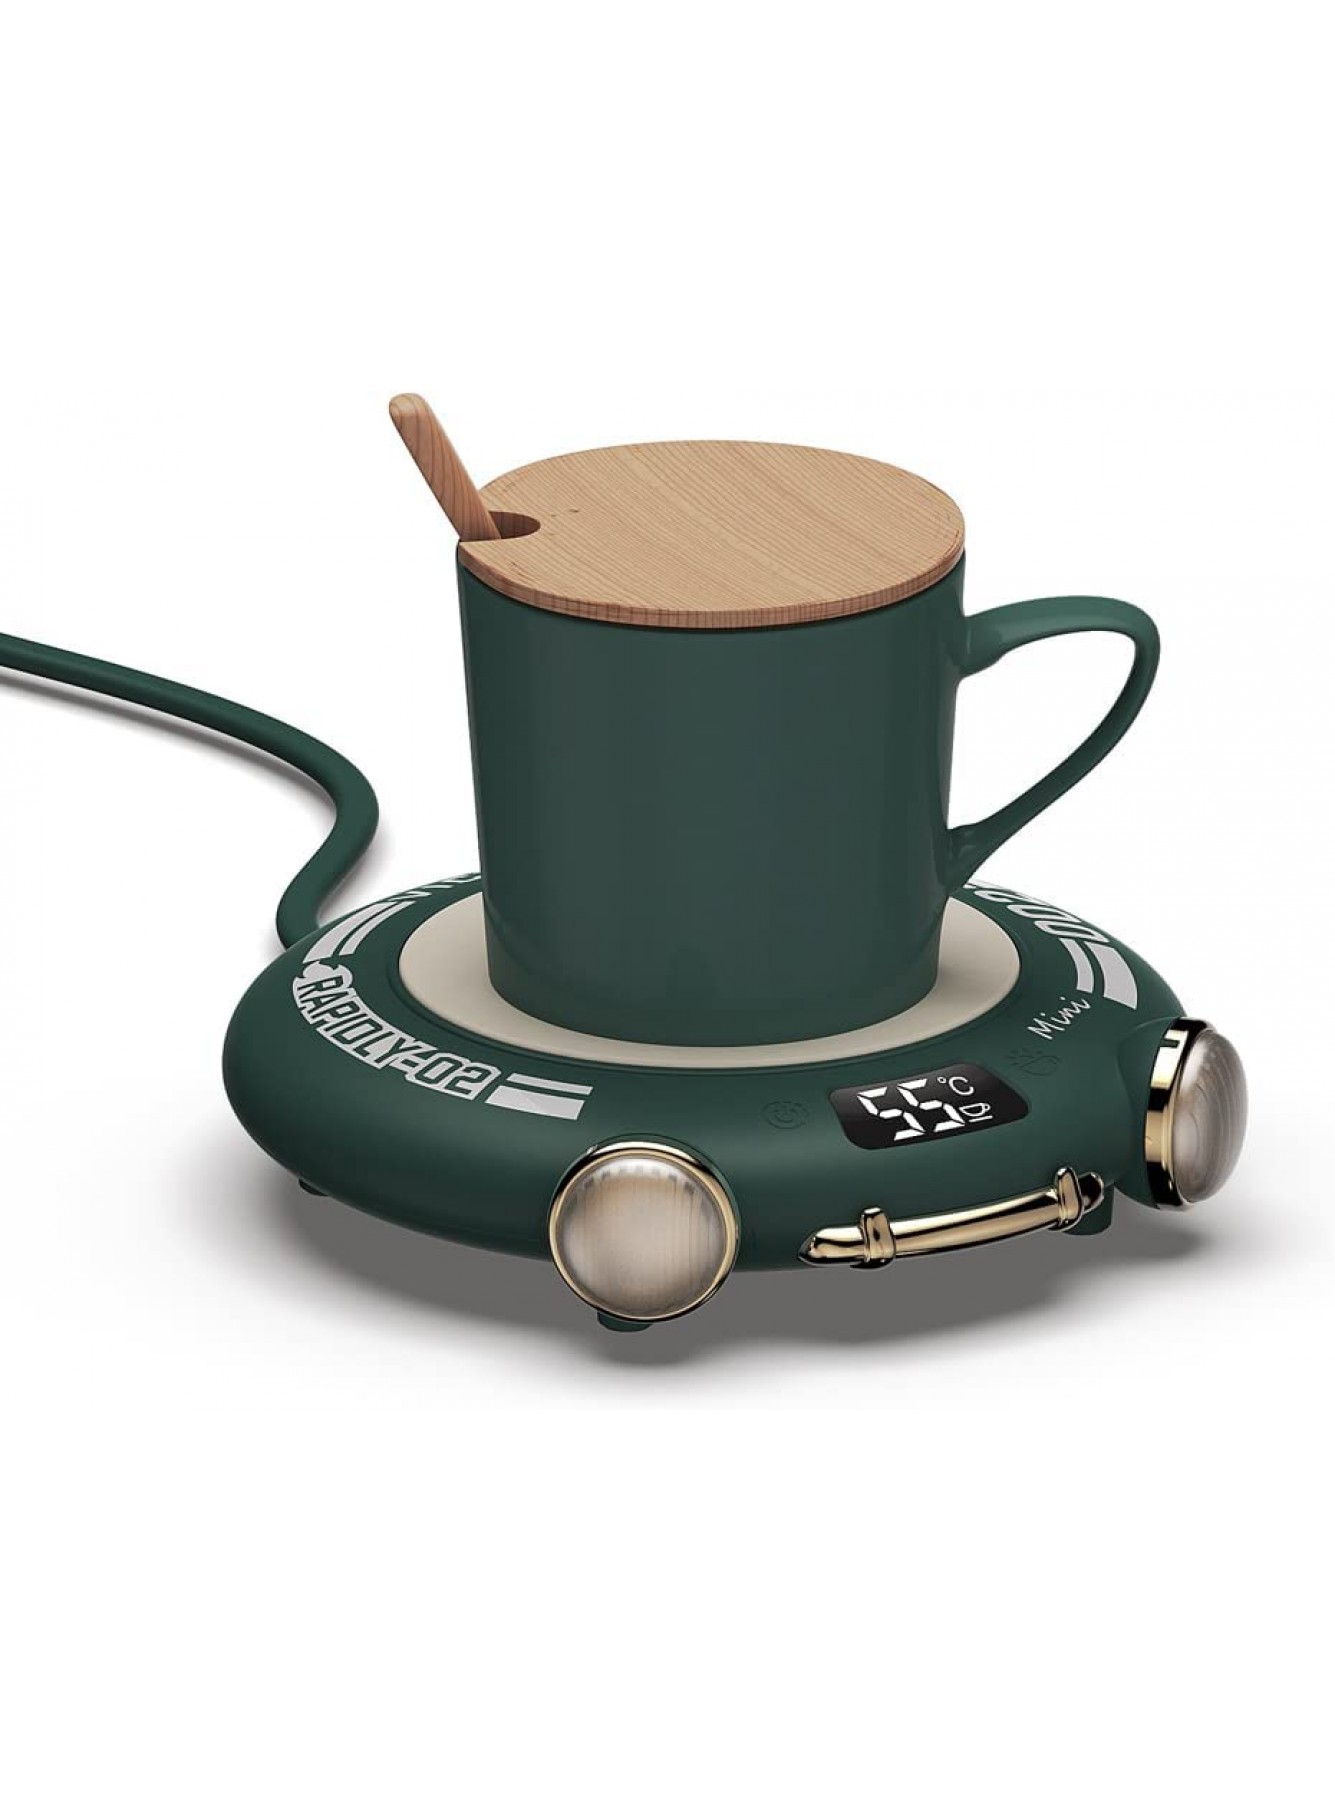 Gratulatio Smart Coffee Mug Warmer Cup Warmer for Coffee Milk Tea with 3 Temperature Settings Beverage Warmer Automatic Shut Off Coffee Mug Heater Coffee Warmer Plate Cup not Included B09YCWRKYB